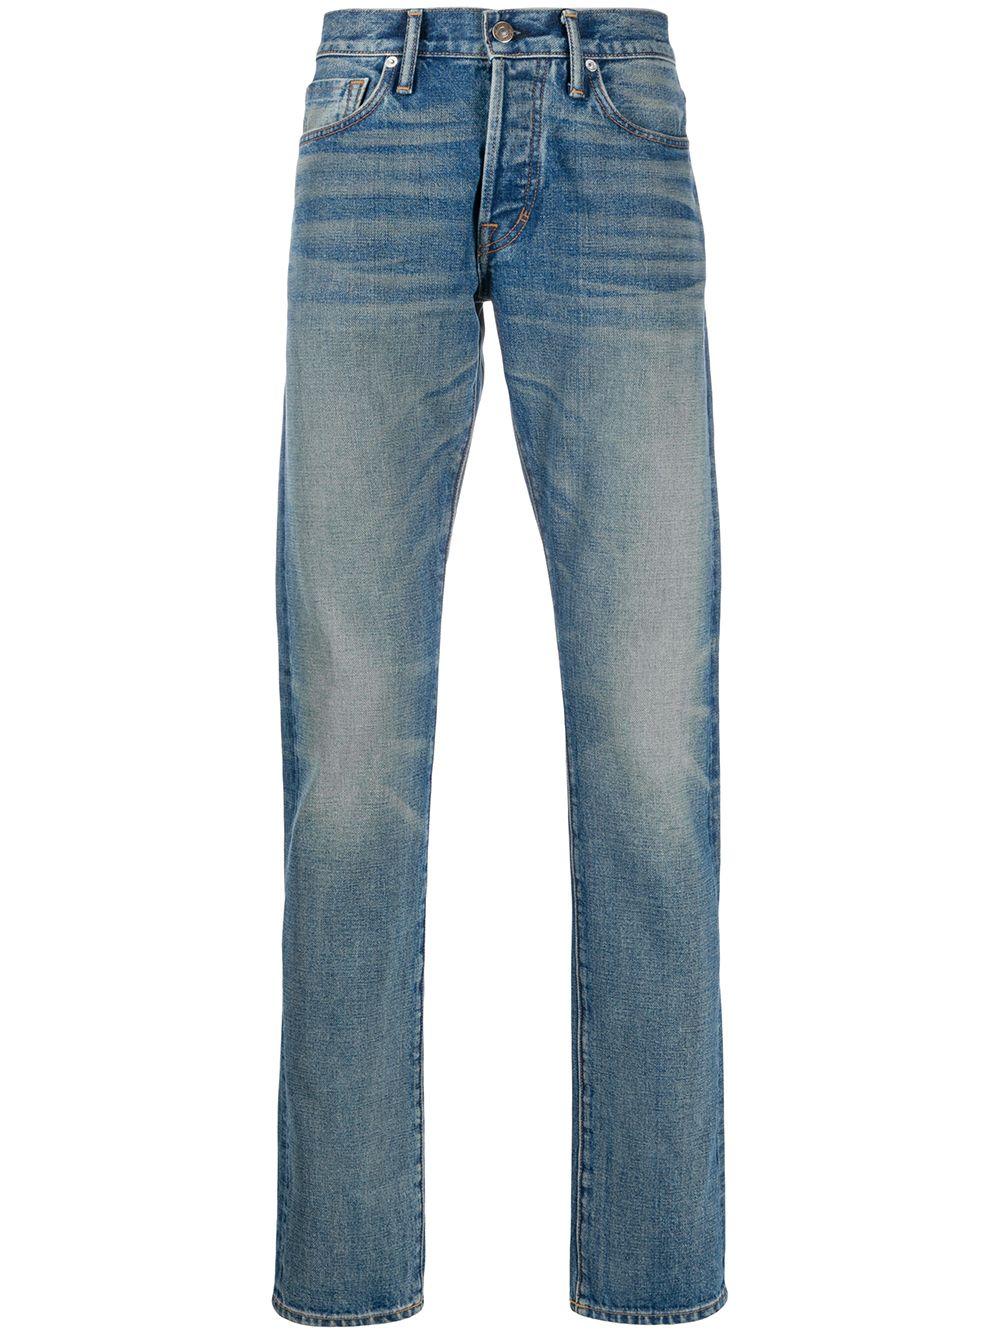 Tom Ford Denim Faded-effect Straight-leg Jeans in Blue for Men - Lyst